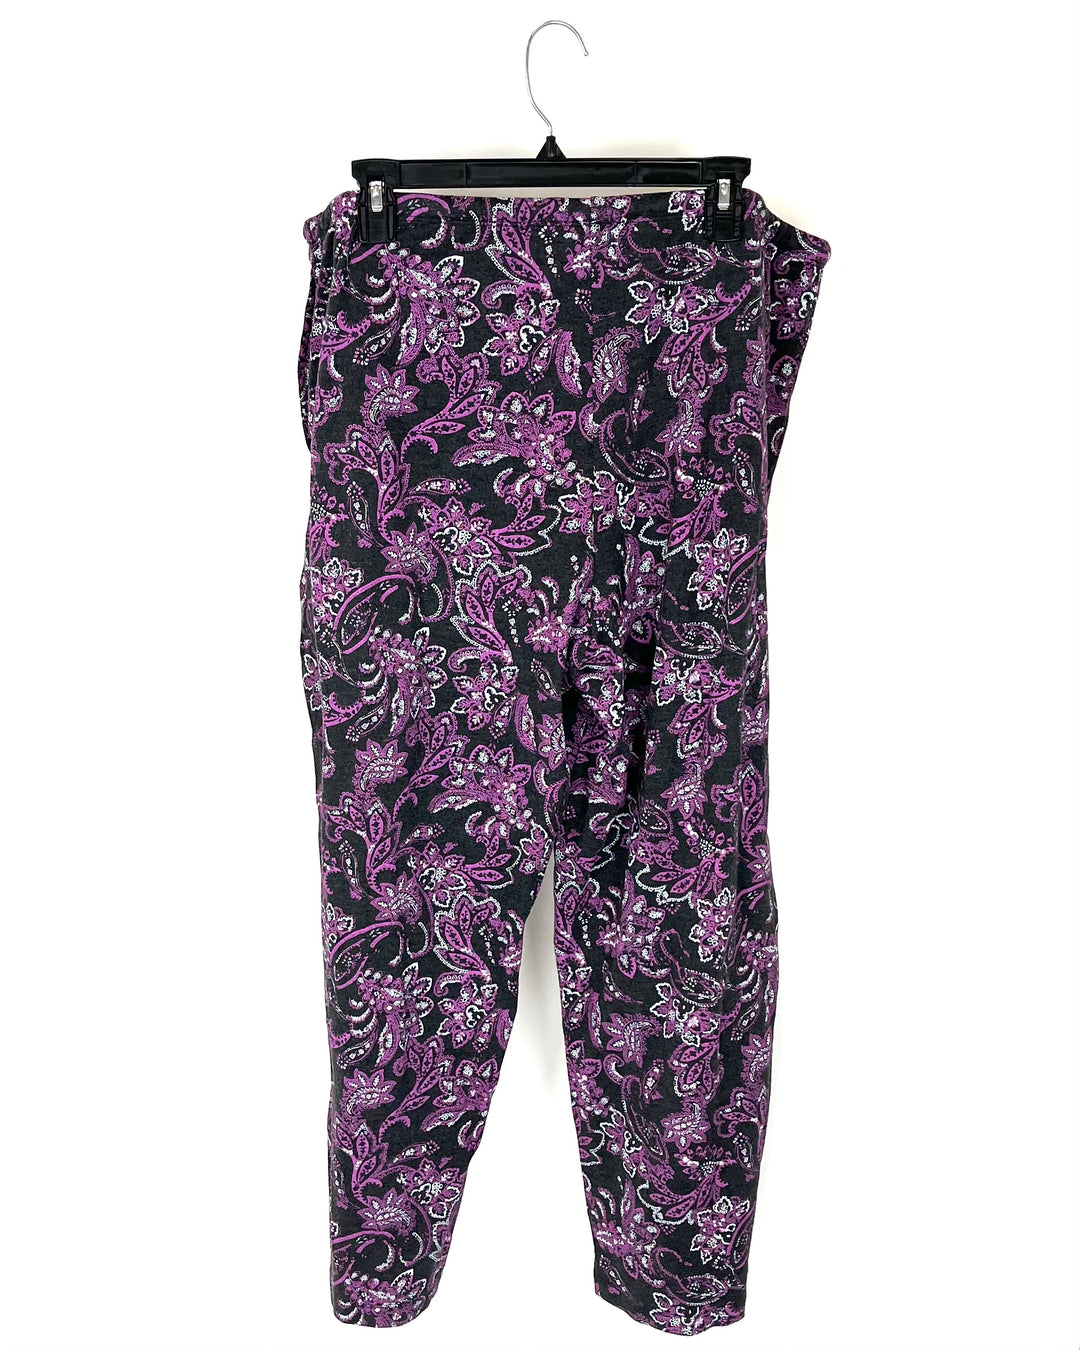 Grey And Purple Paisley Cropped Pajama Pants - Petite 1X